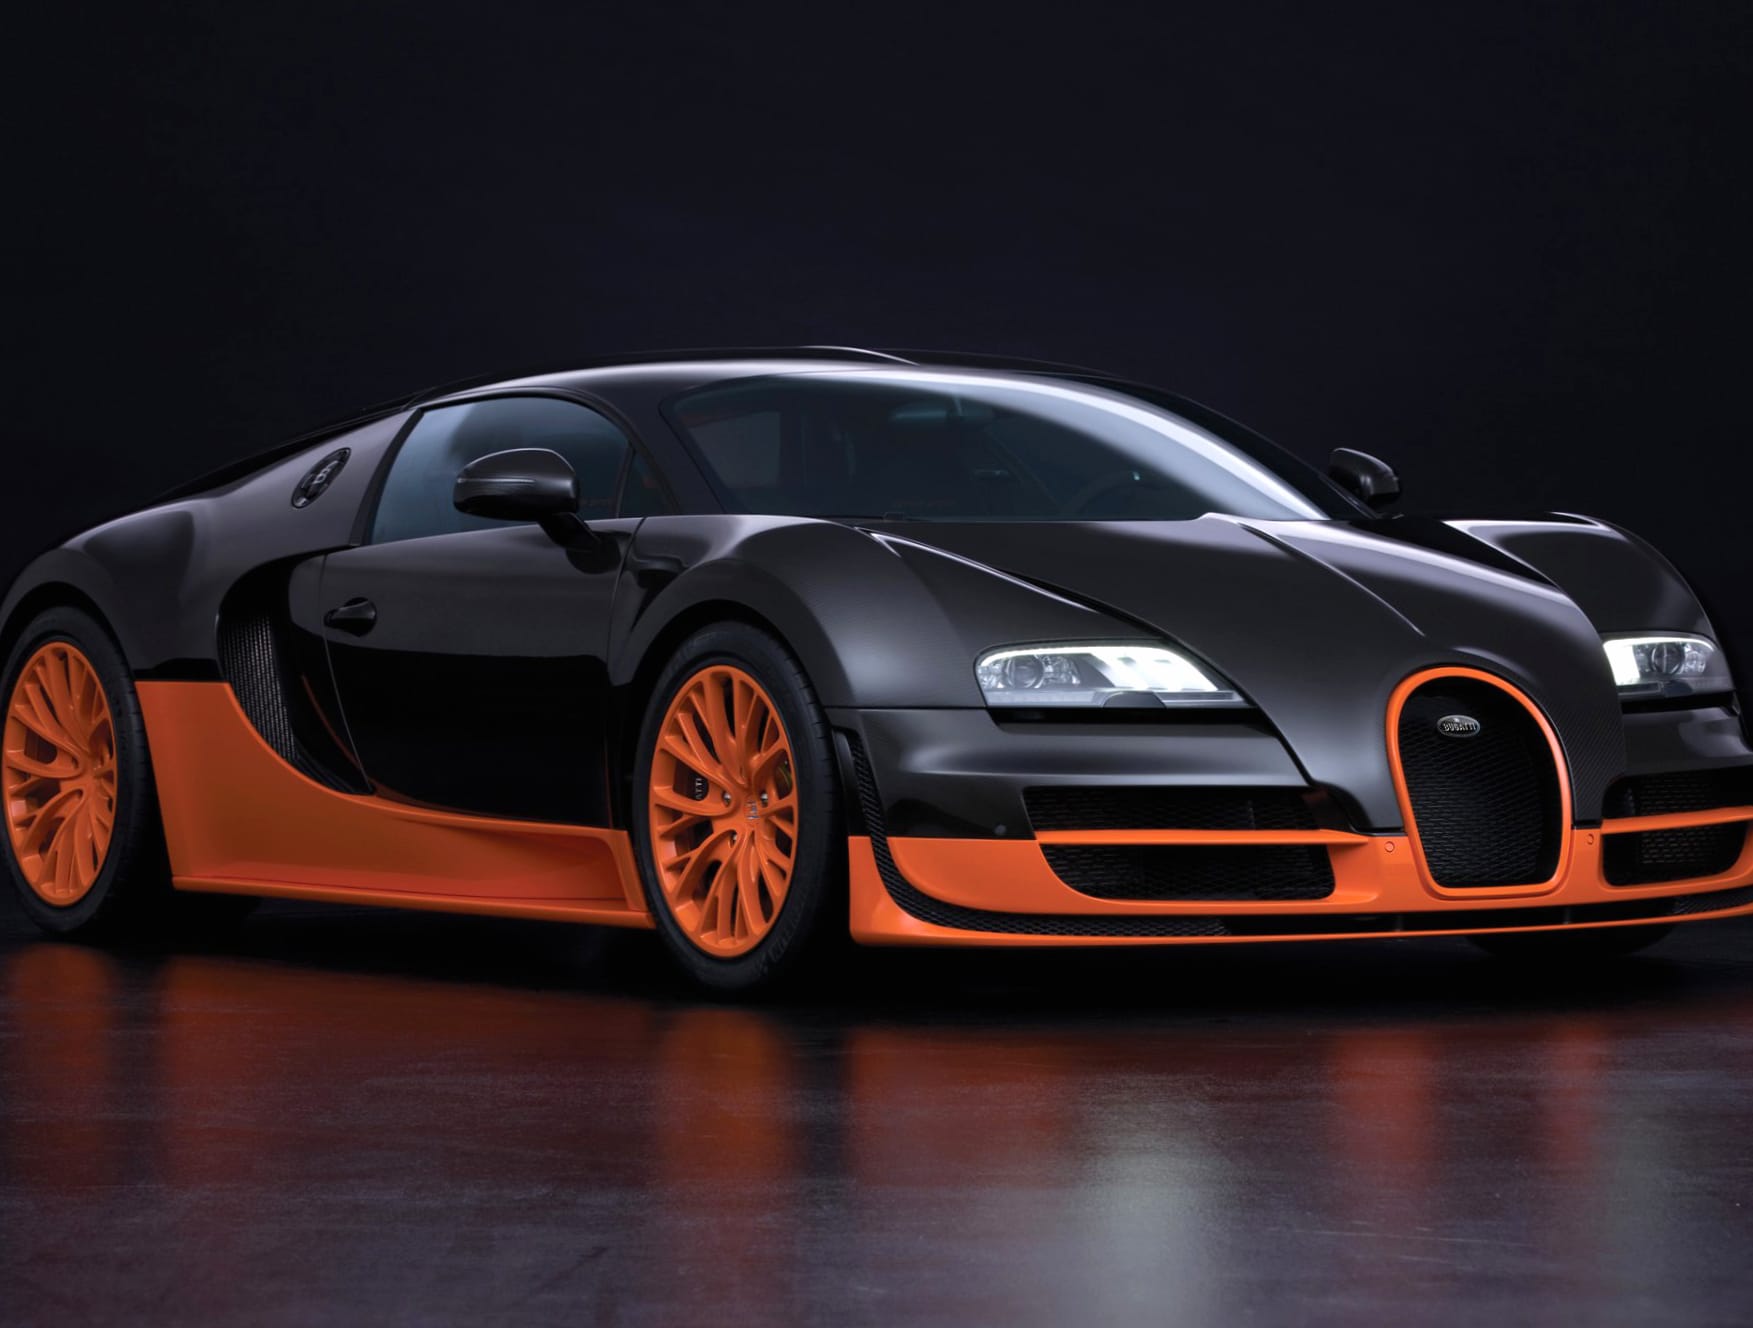 Bugatti Veyron 16-4 Super Sport at 1024 x 768 size wallpapers HD quality